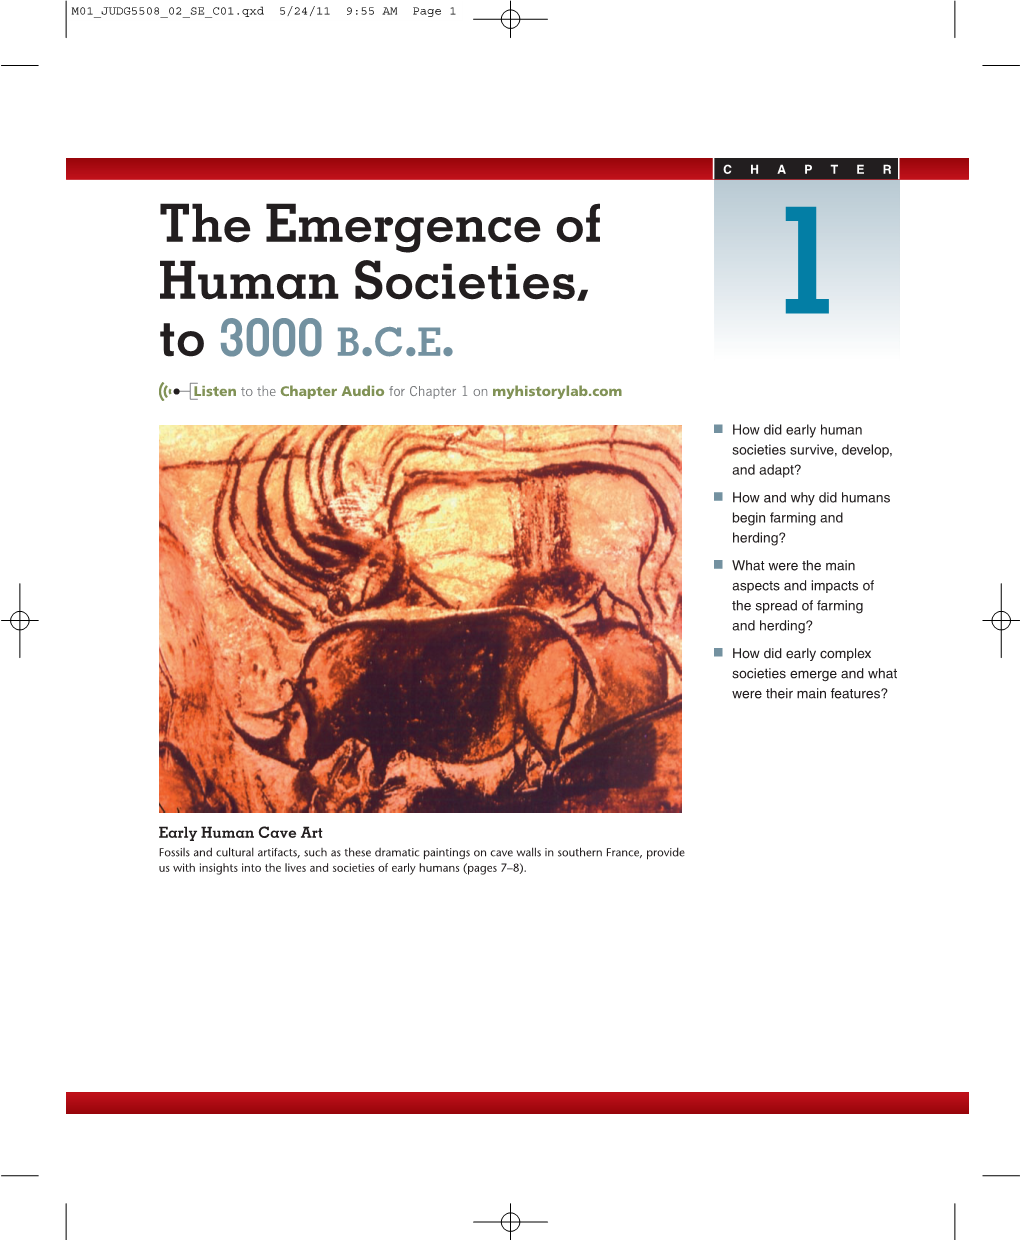 The Emergence of Human Societies, to 3000 B.C.E